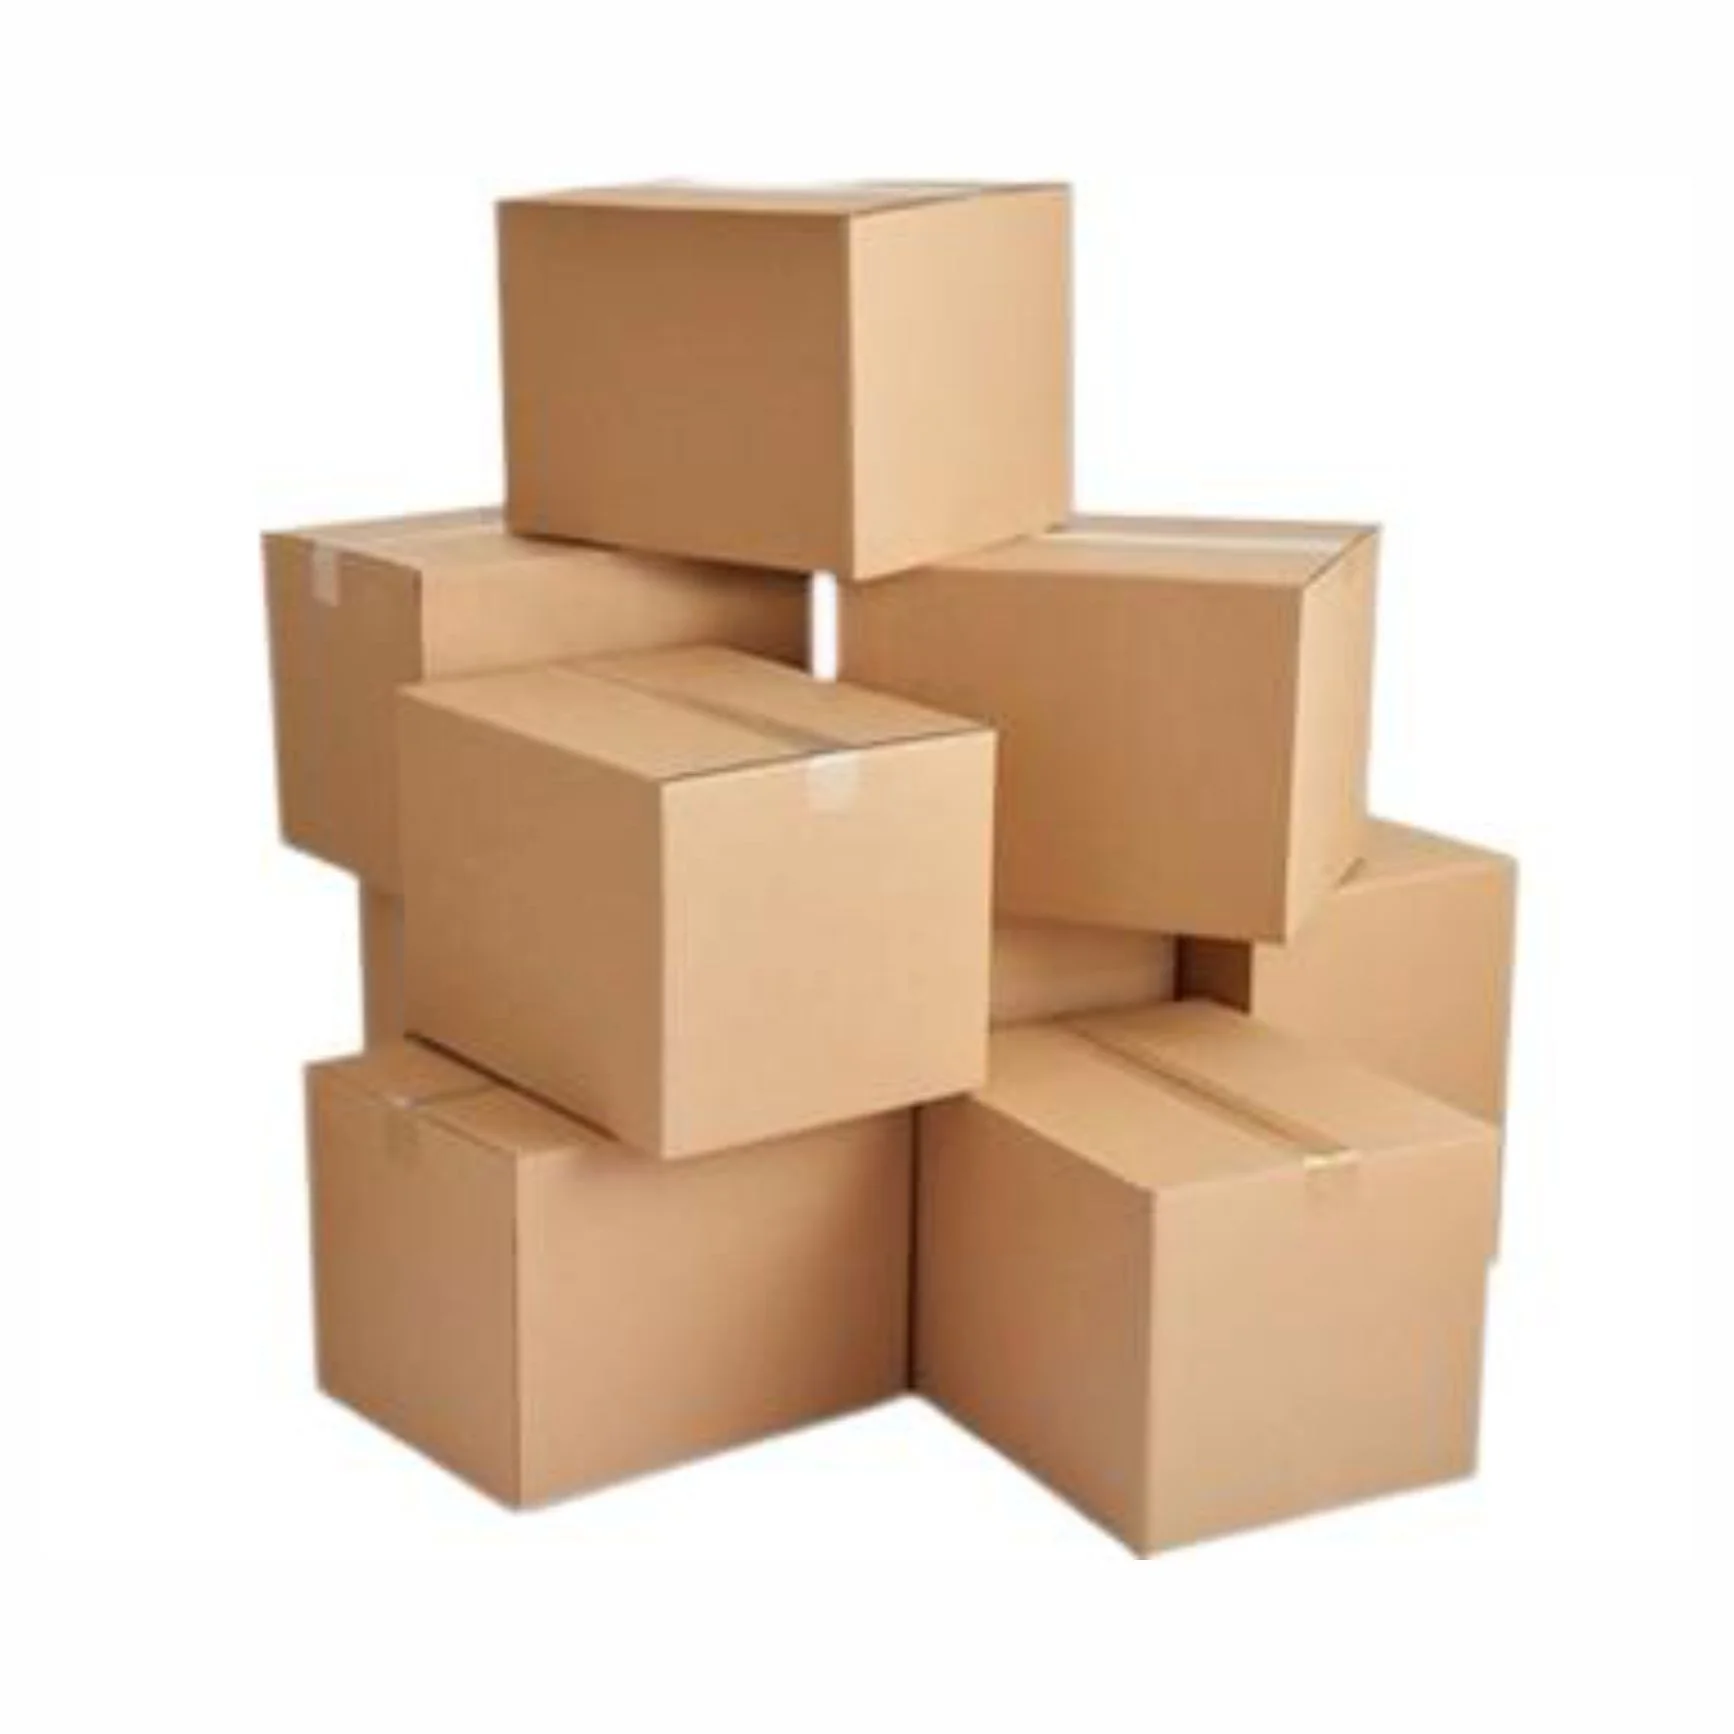 Fill in box can carton bottle. Картонная коробка. Картонные коробки склад. Коробки картонные стопка. Короб картонный на склад.